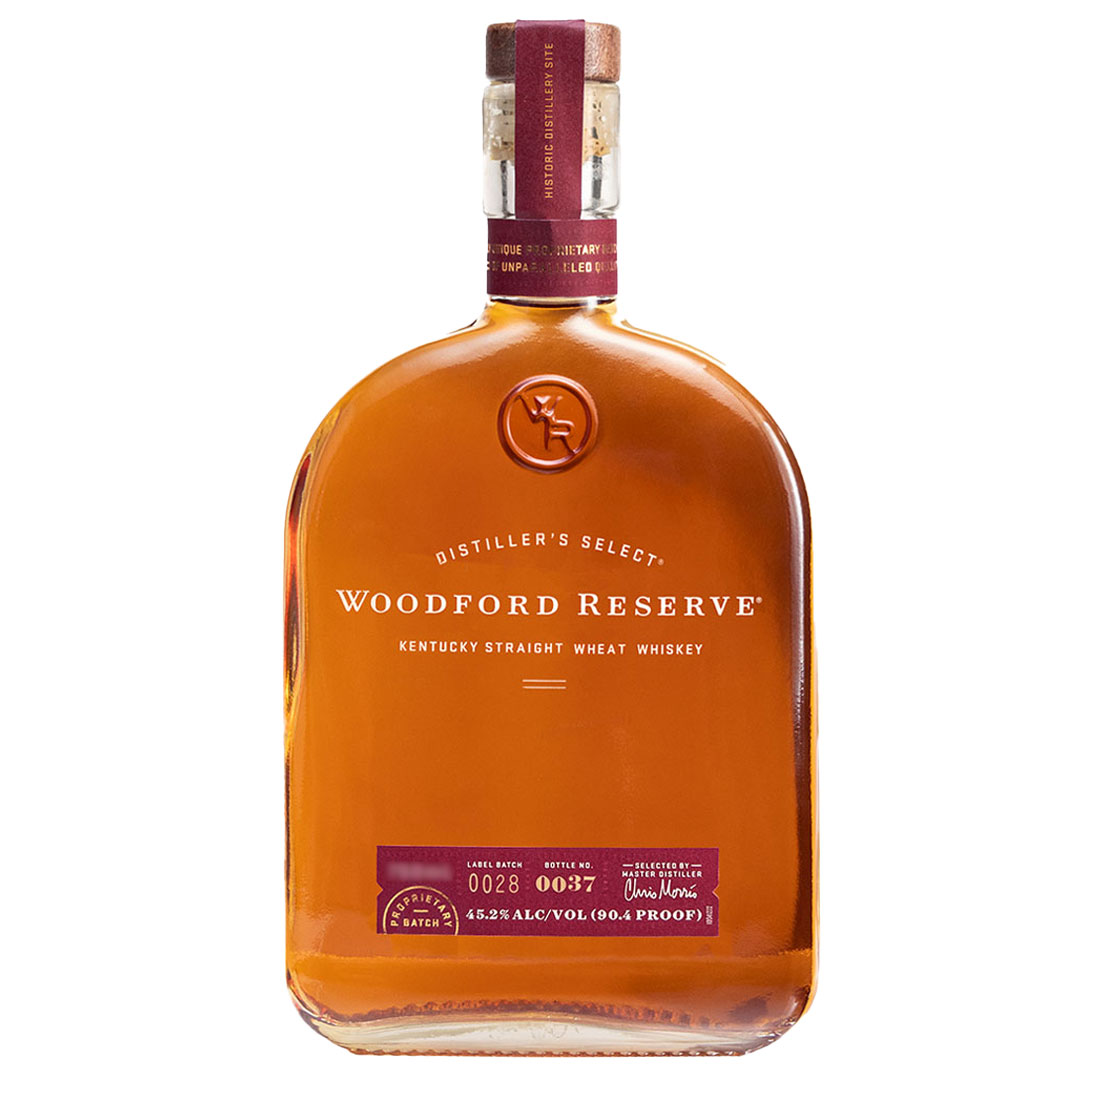 LB_Bottle-Woodford-Reserve-Kentucky-Straight-Wheat